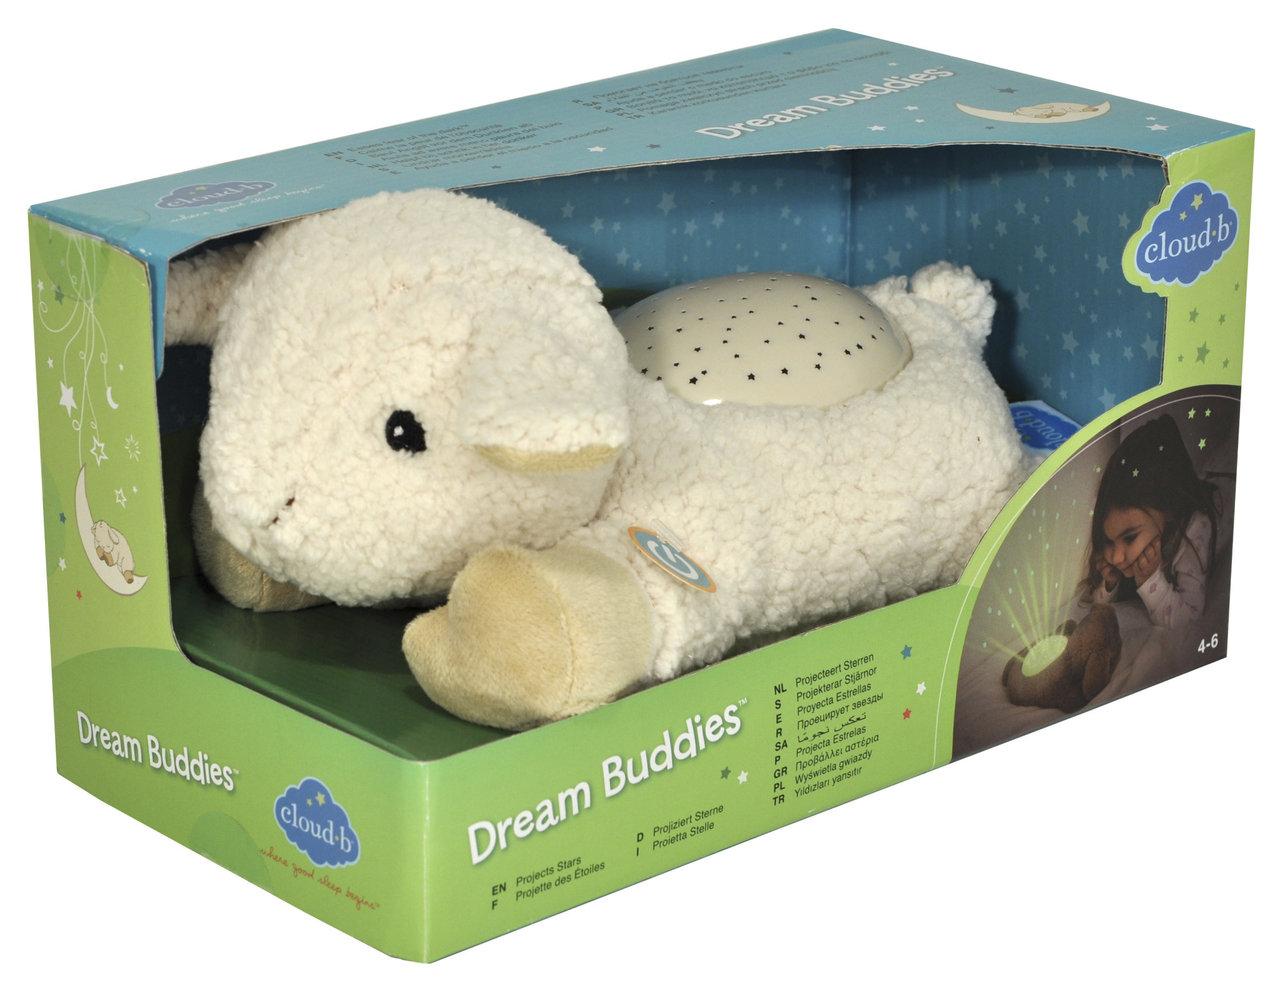 Dream_Buddy_Sheep_Cloud-b_Verpackung